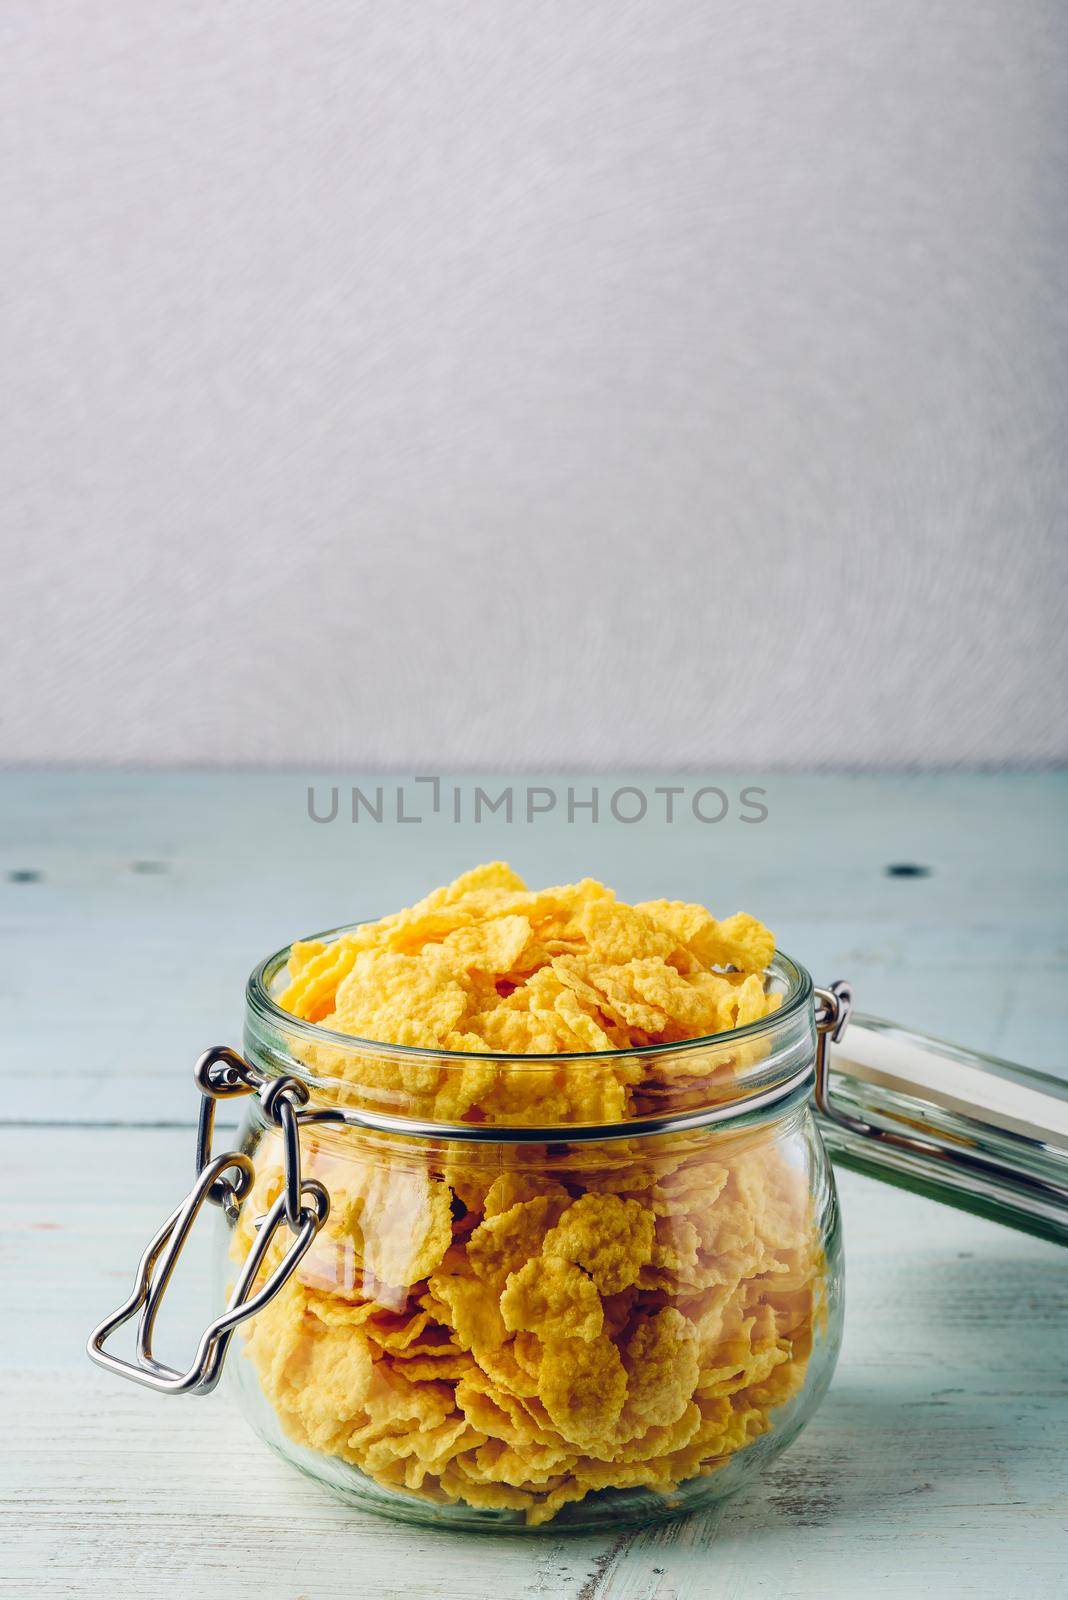 Corn flakes in a glass jar by Seva_blsv